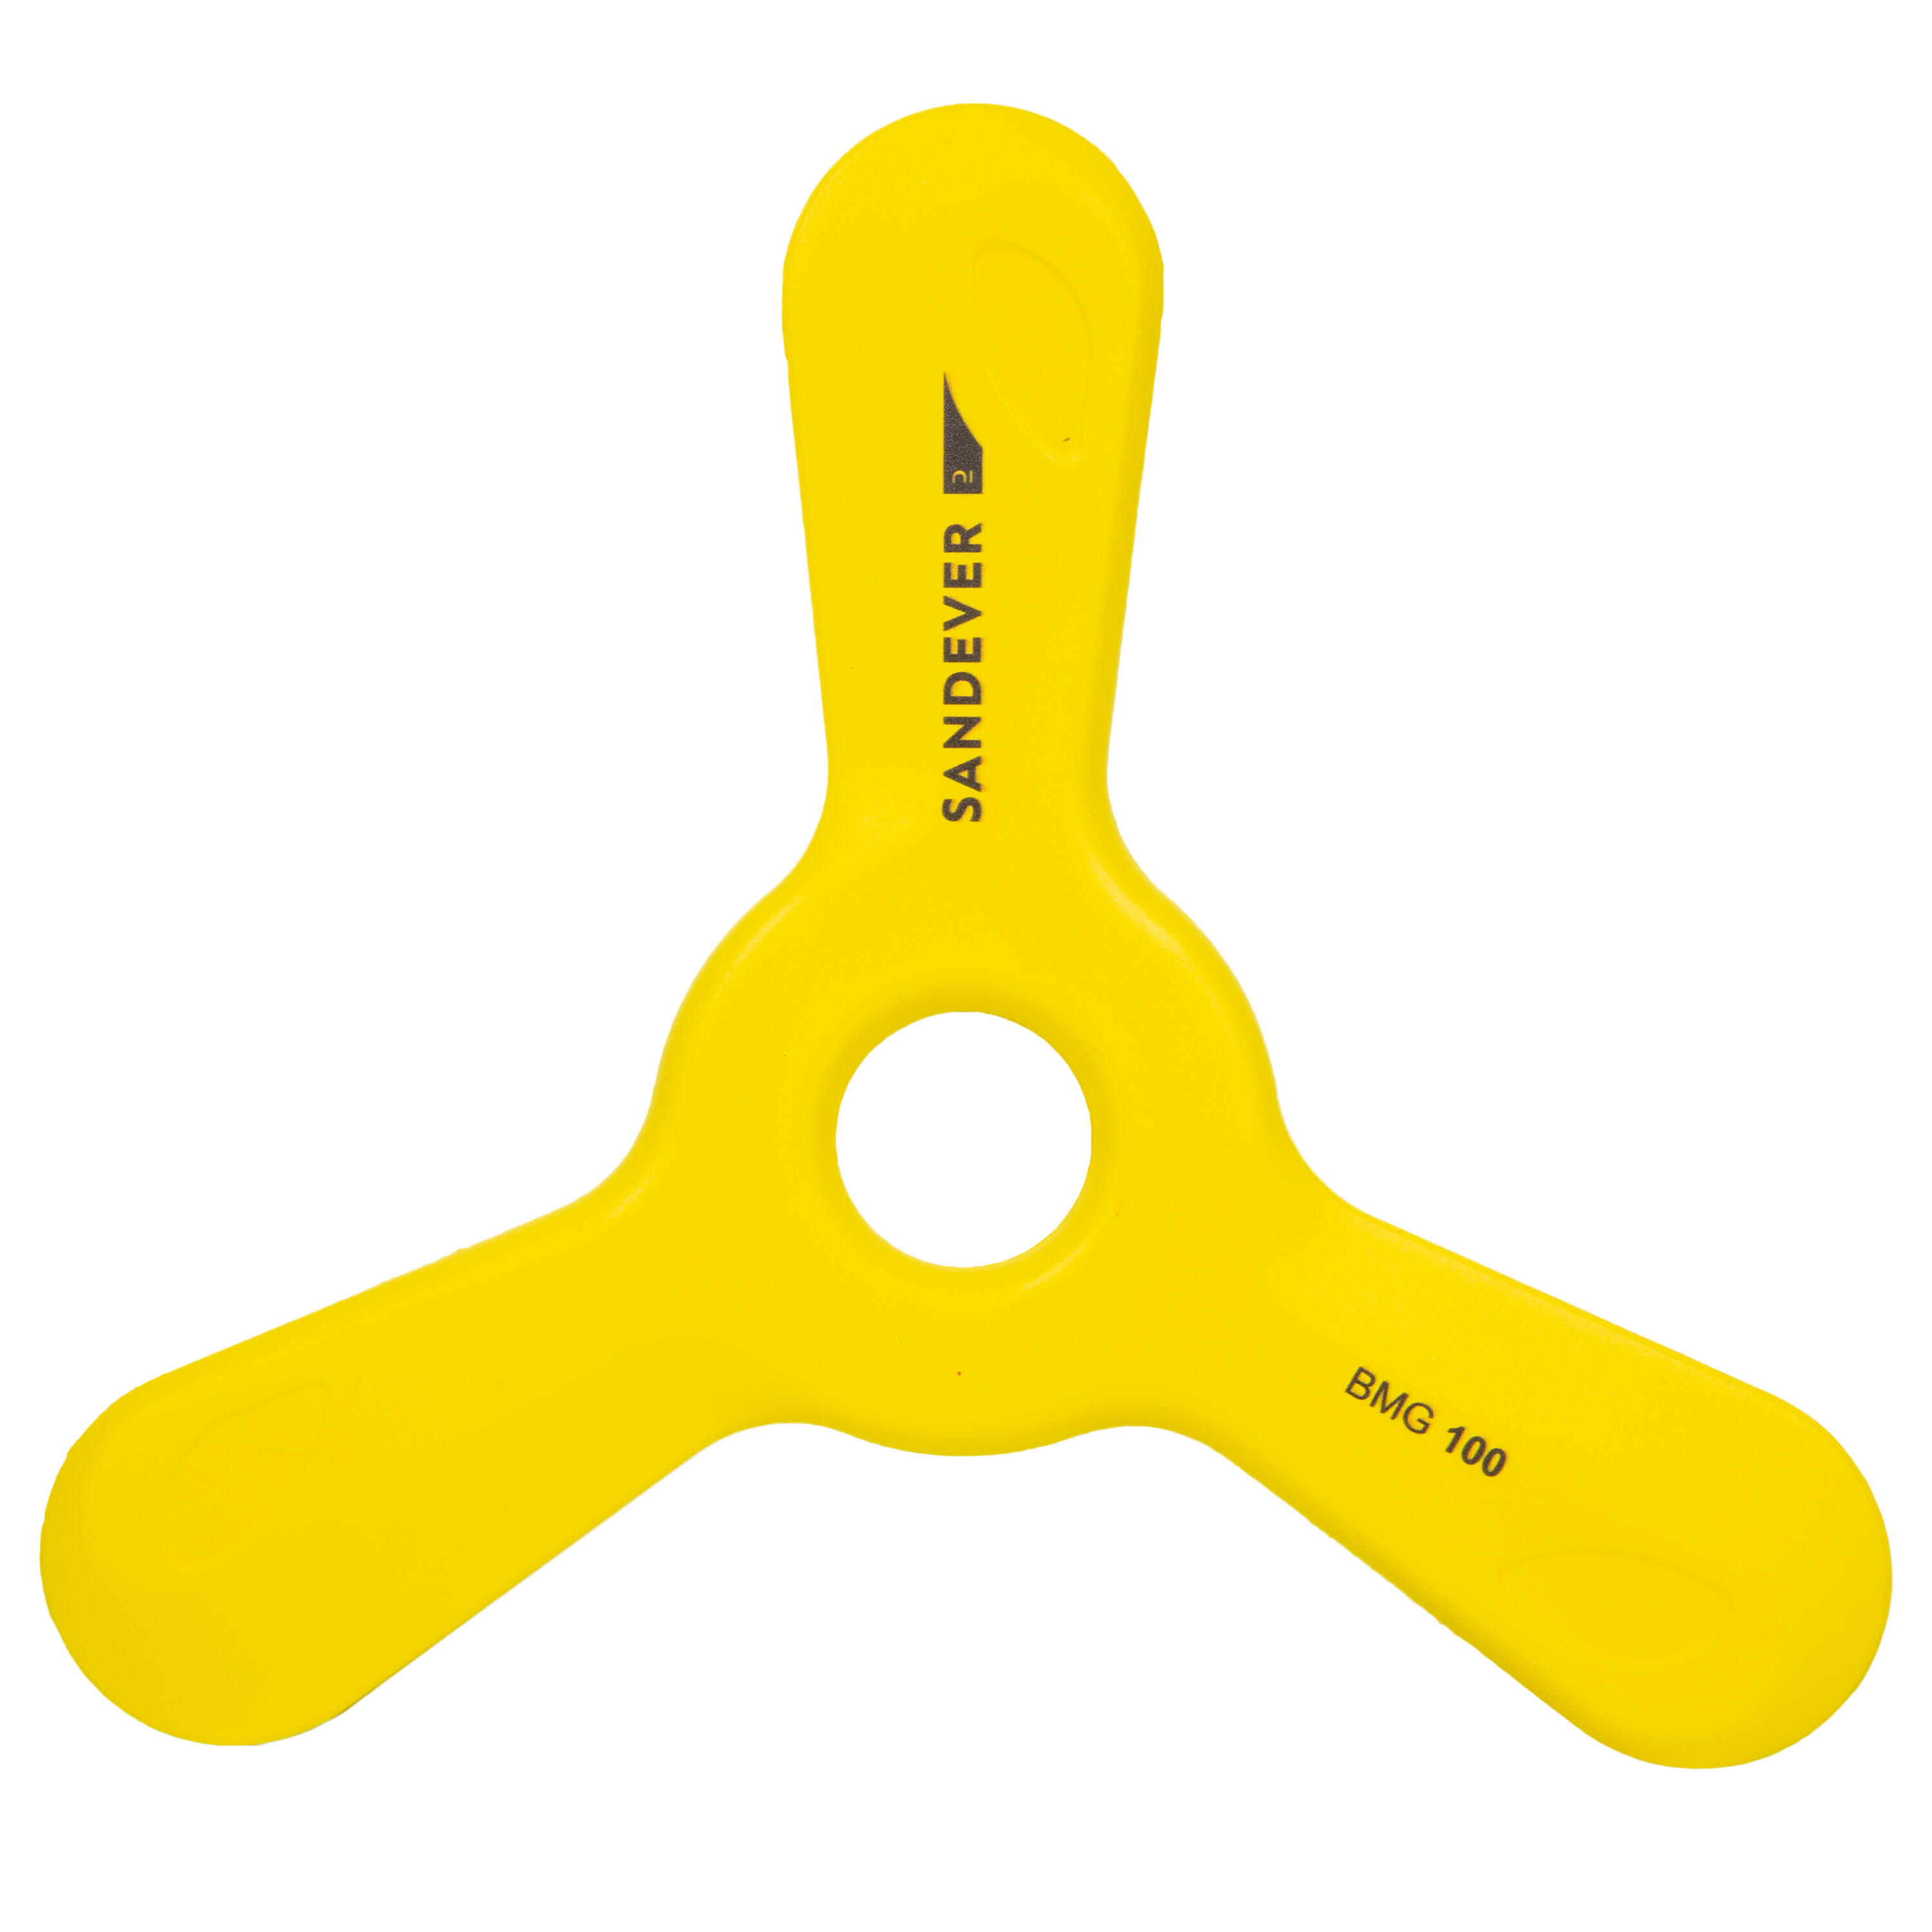 Boomerang Soft Bsoft 100 - Left-Handed 2/4